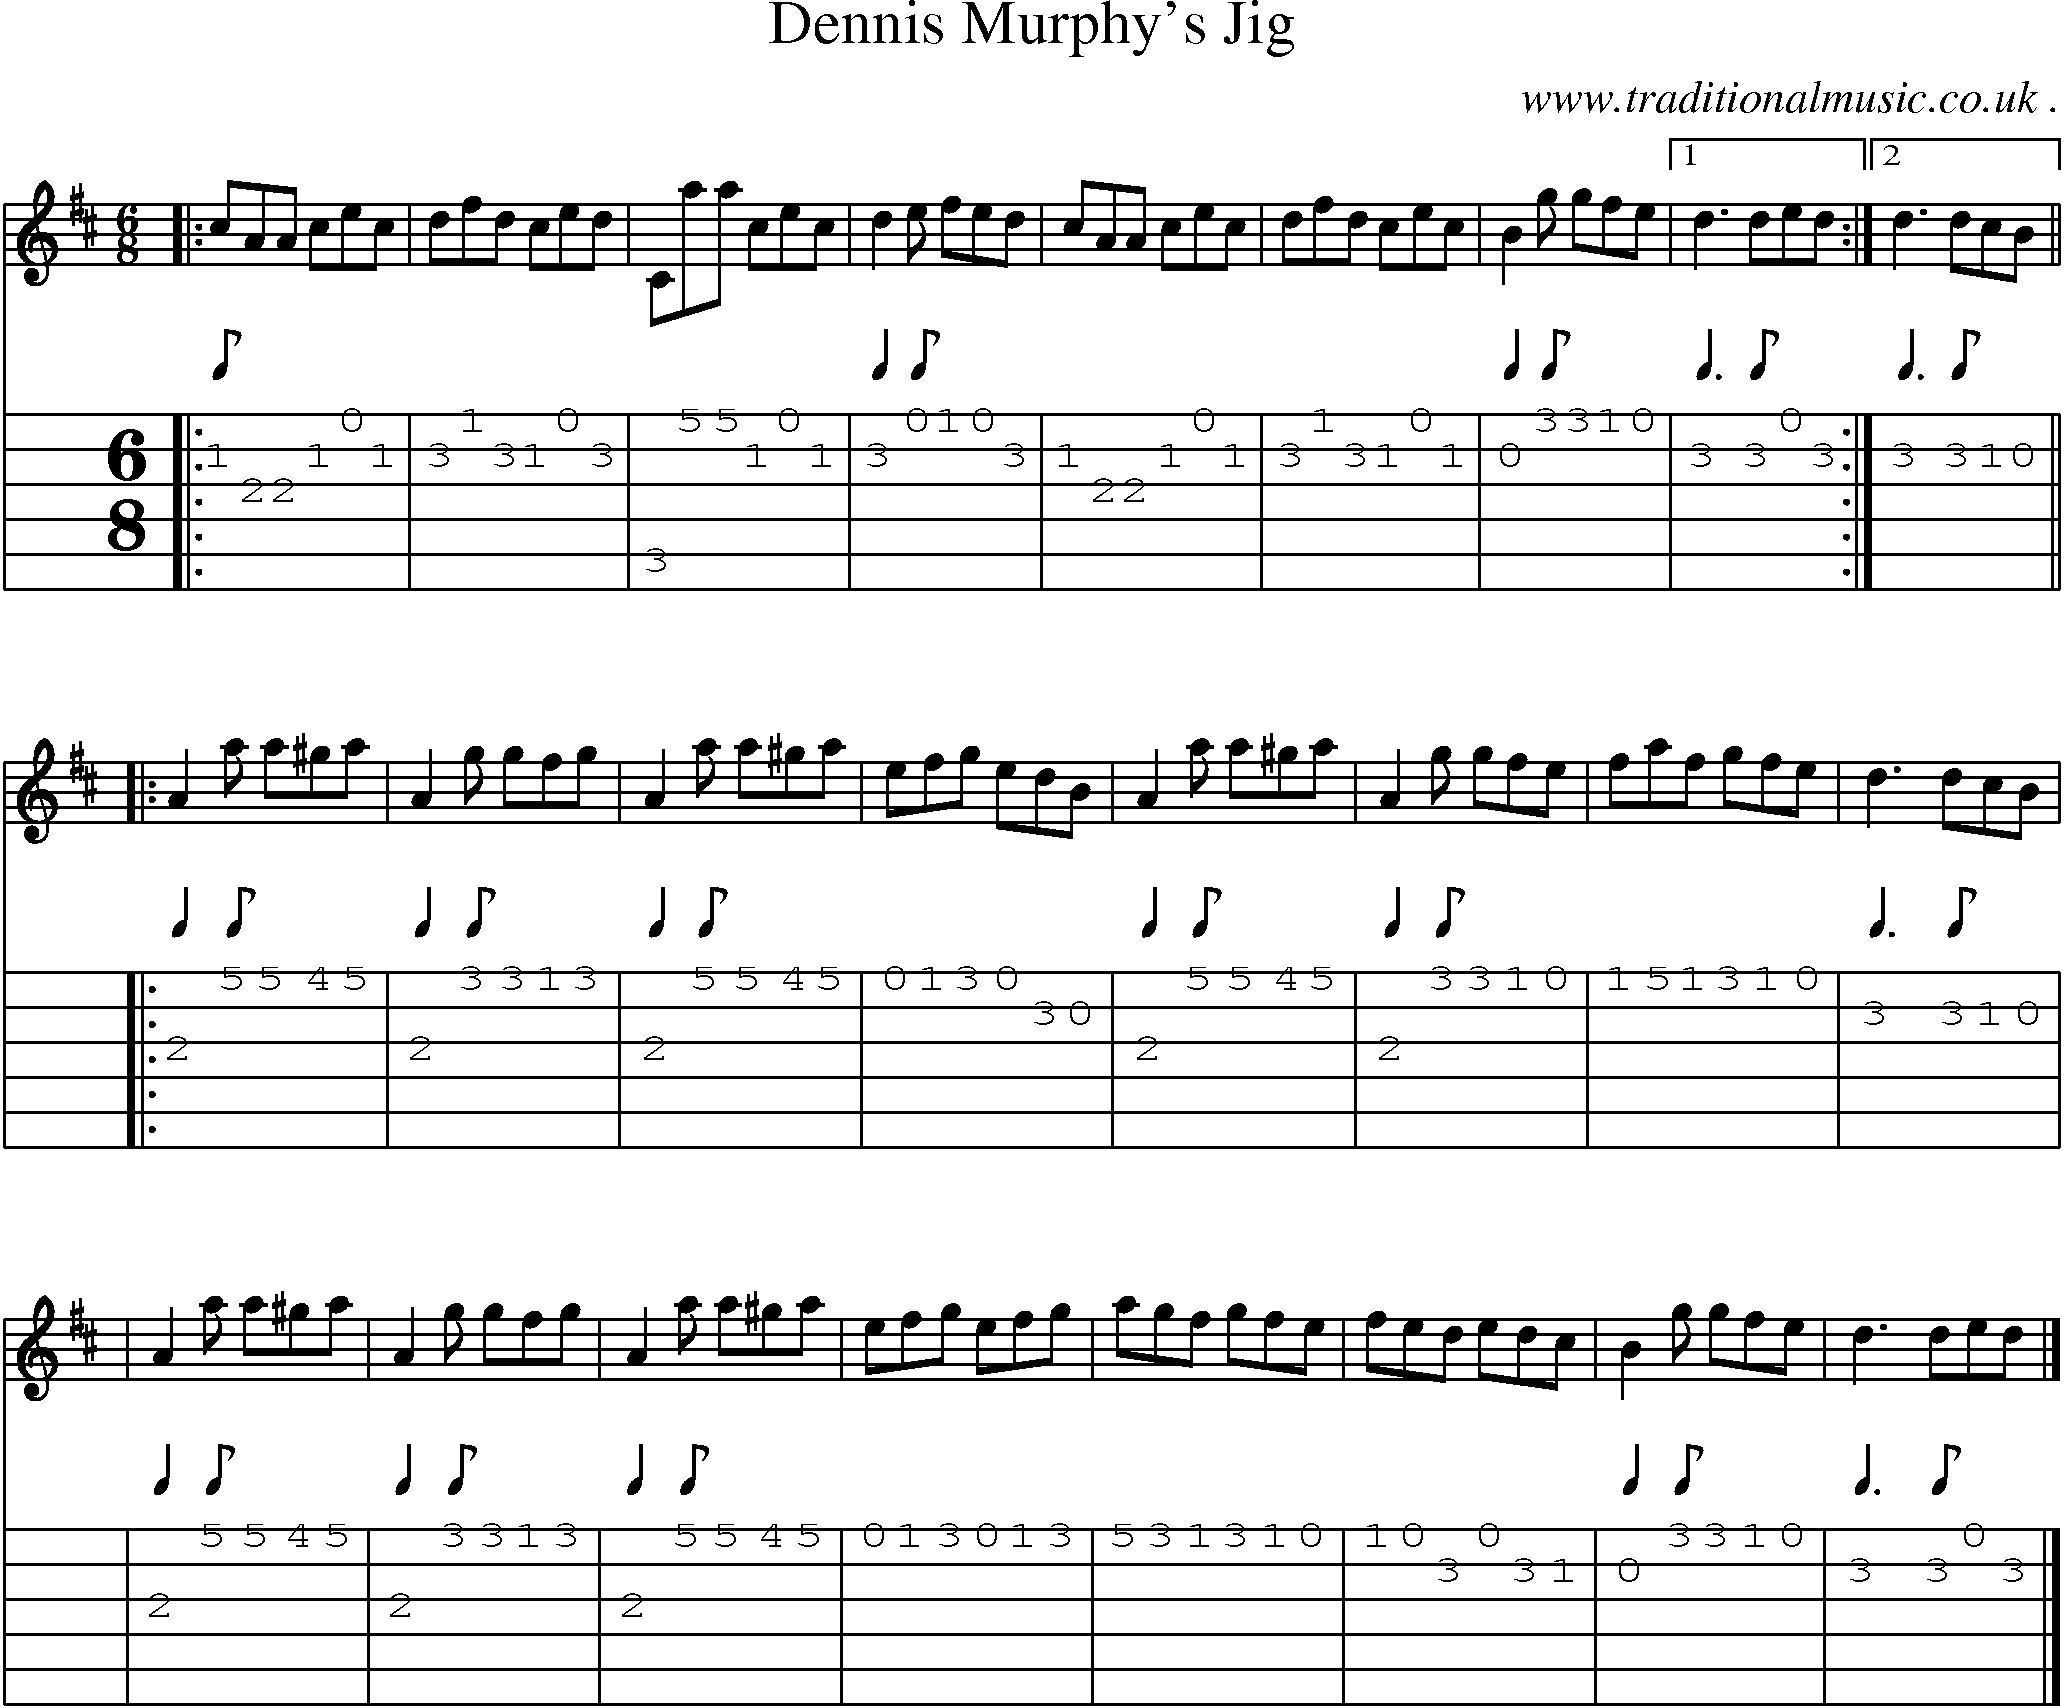 Sheet-music  score, Chords and Guitar Tabs for Dennis Murphys Jig